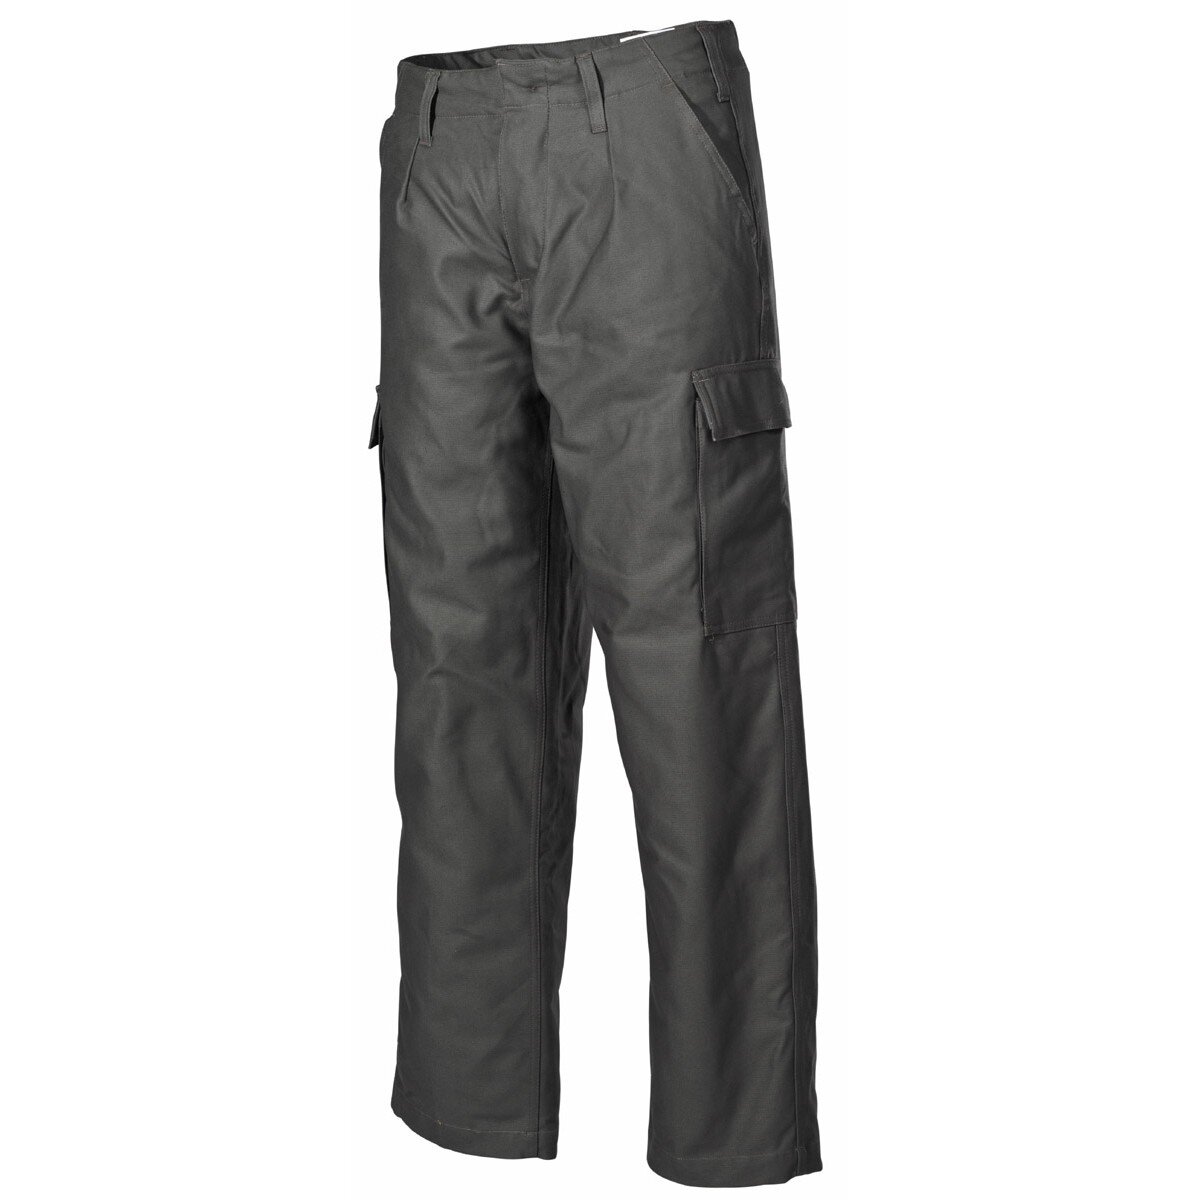 BW Moleskin Pants, thermal lining, OD green, large sizes, 43,99